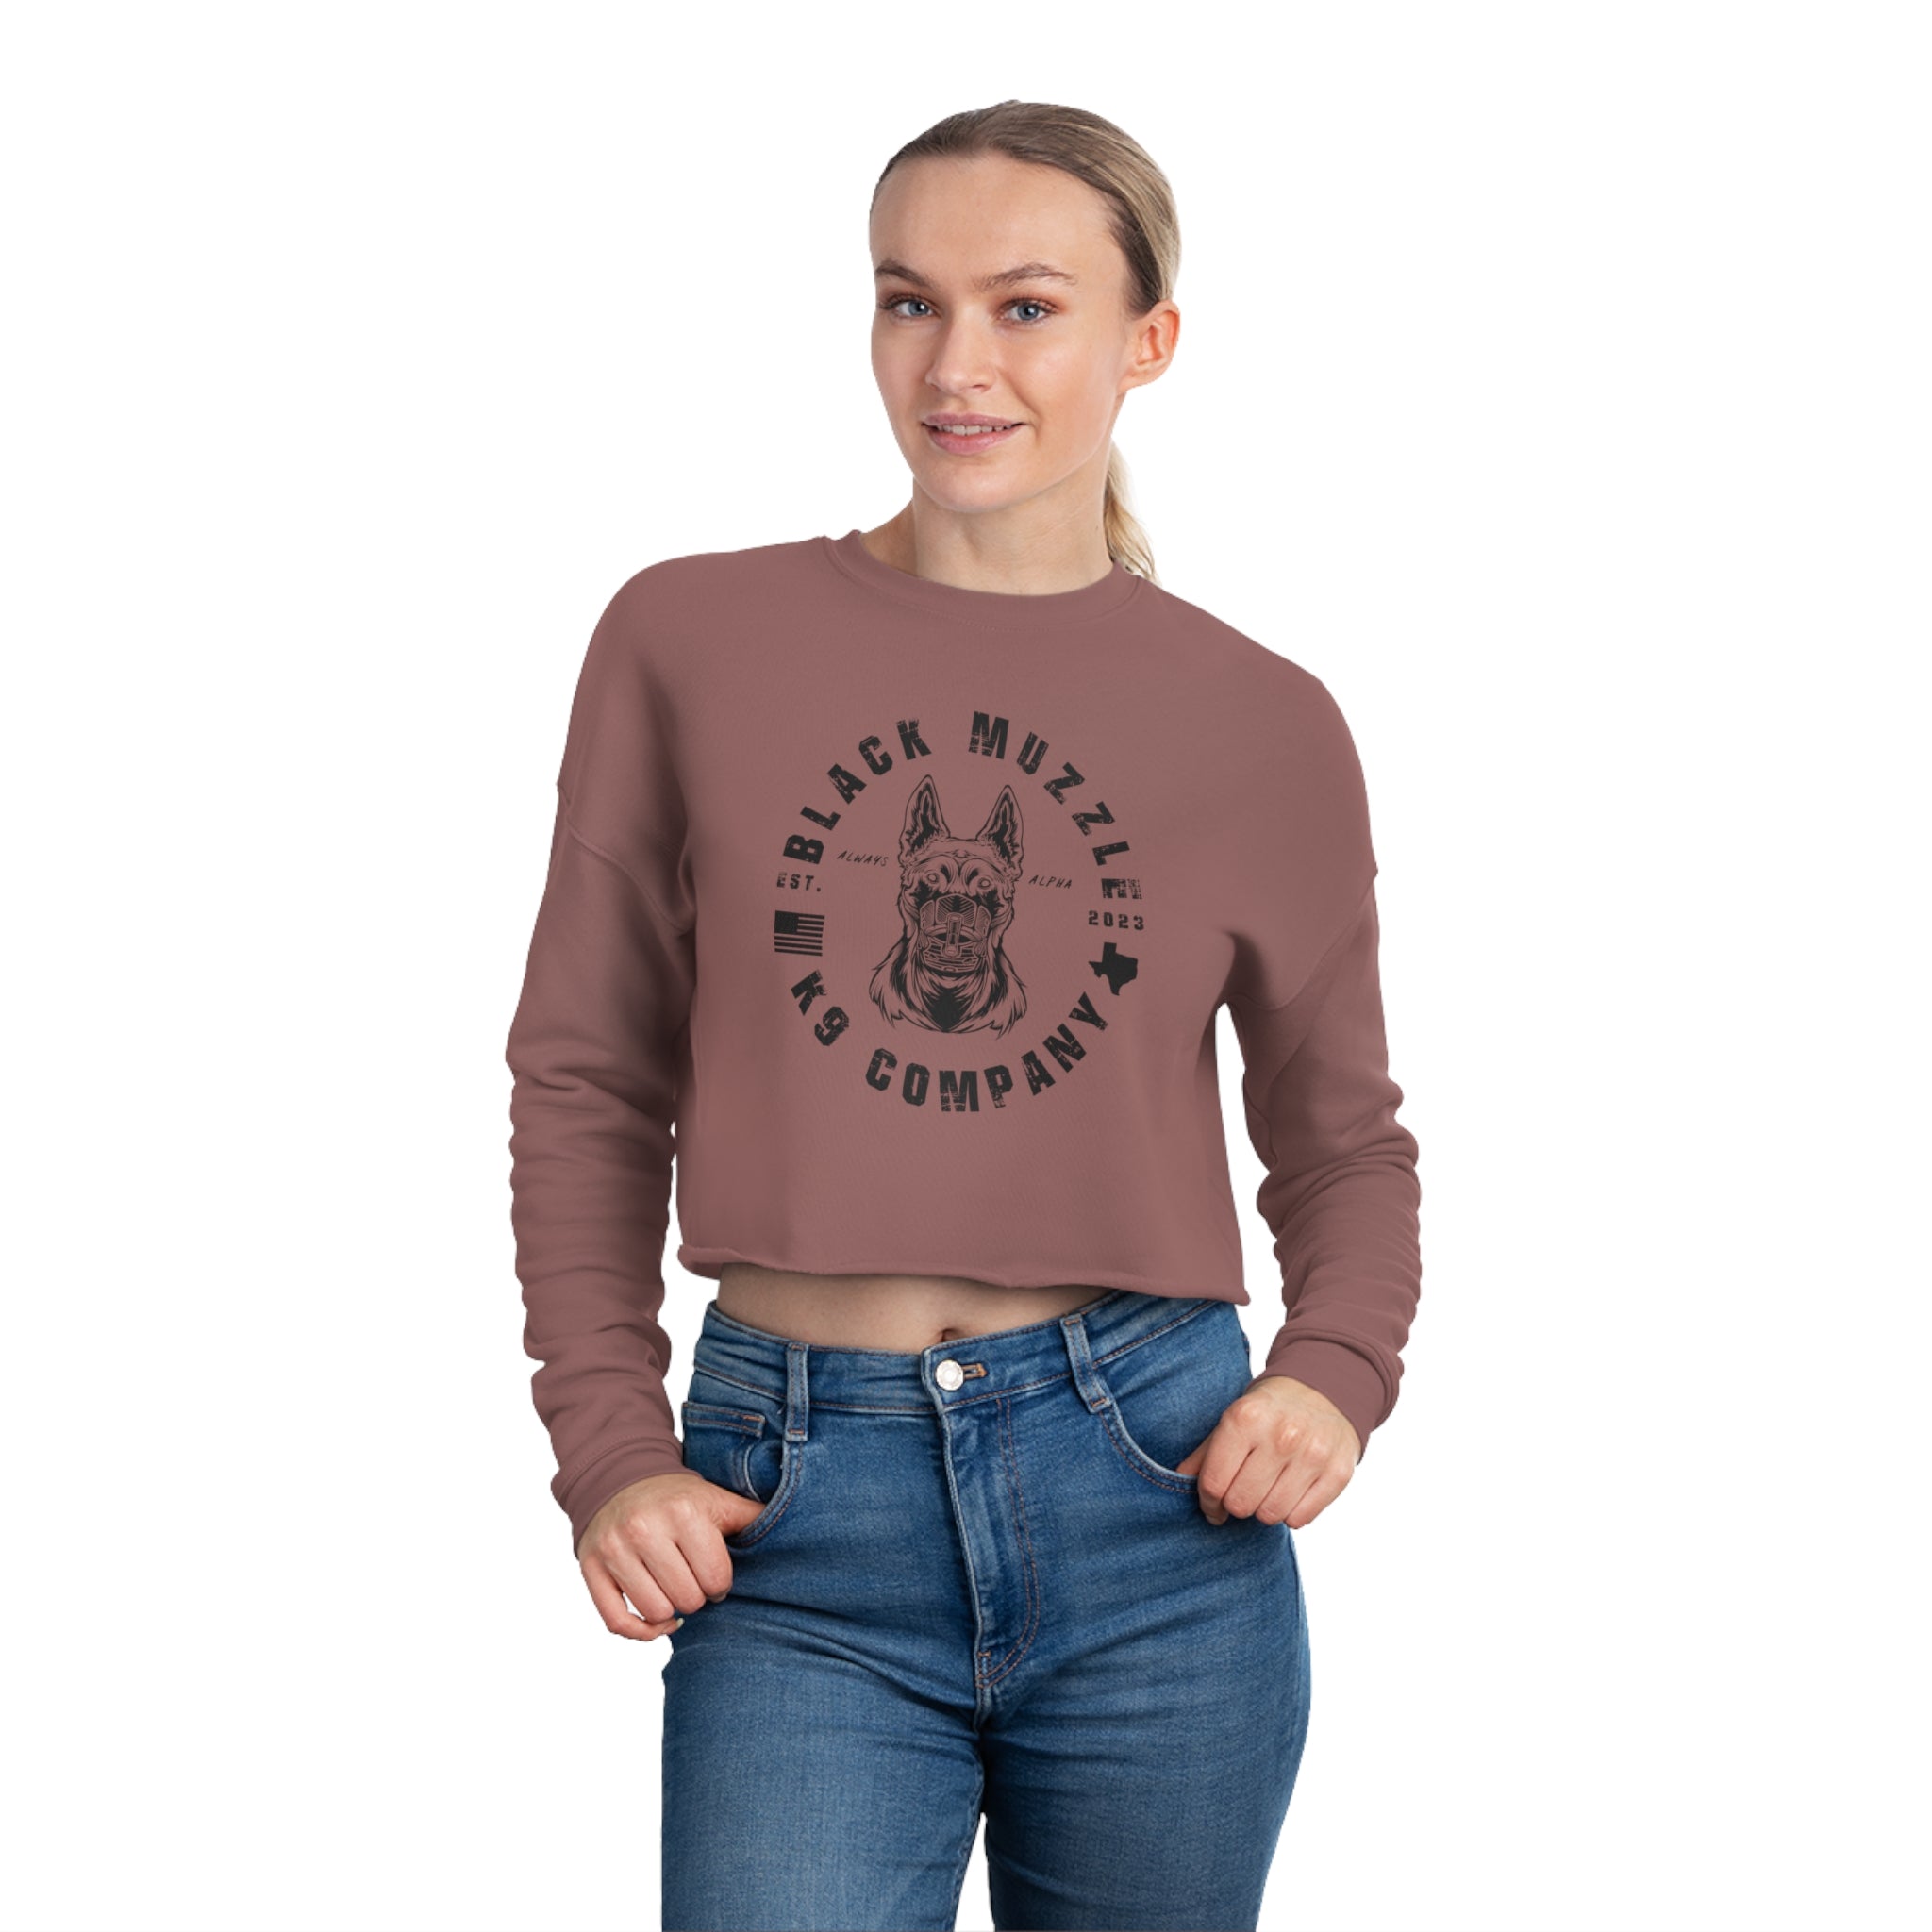 BMK9 - Women's Cropped Sweatshirt